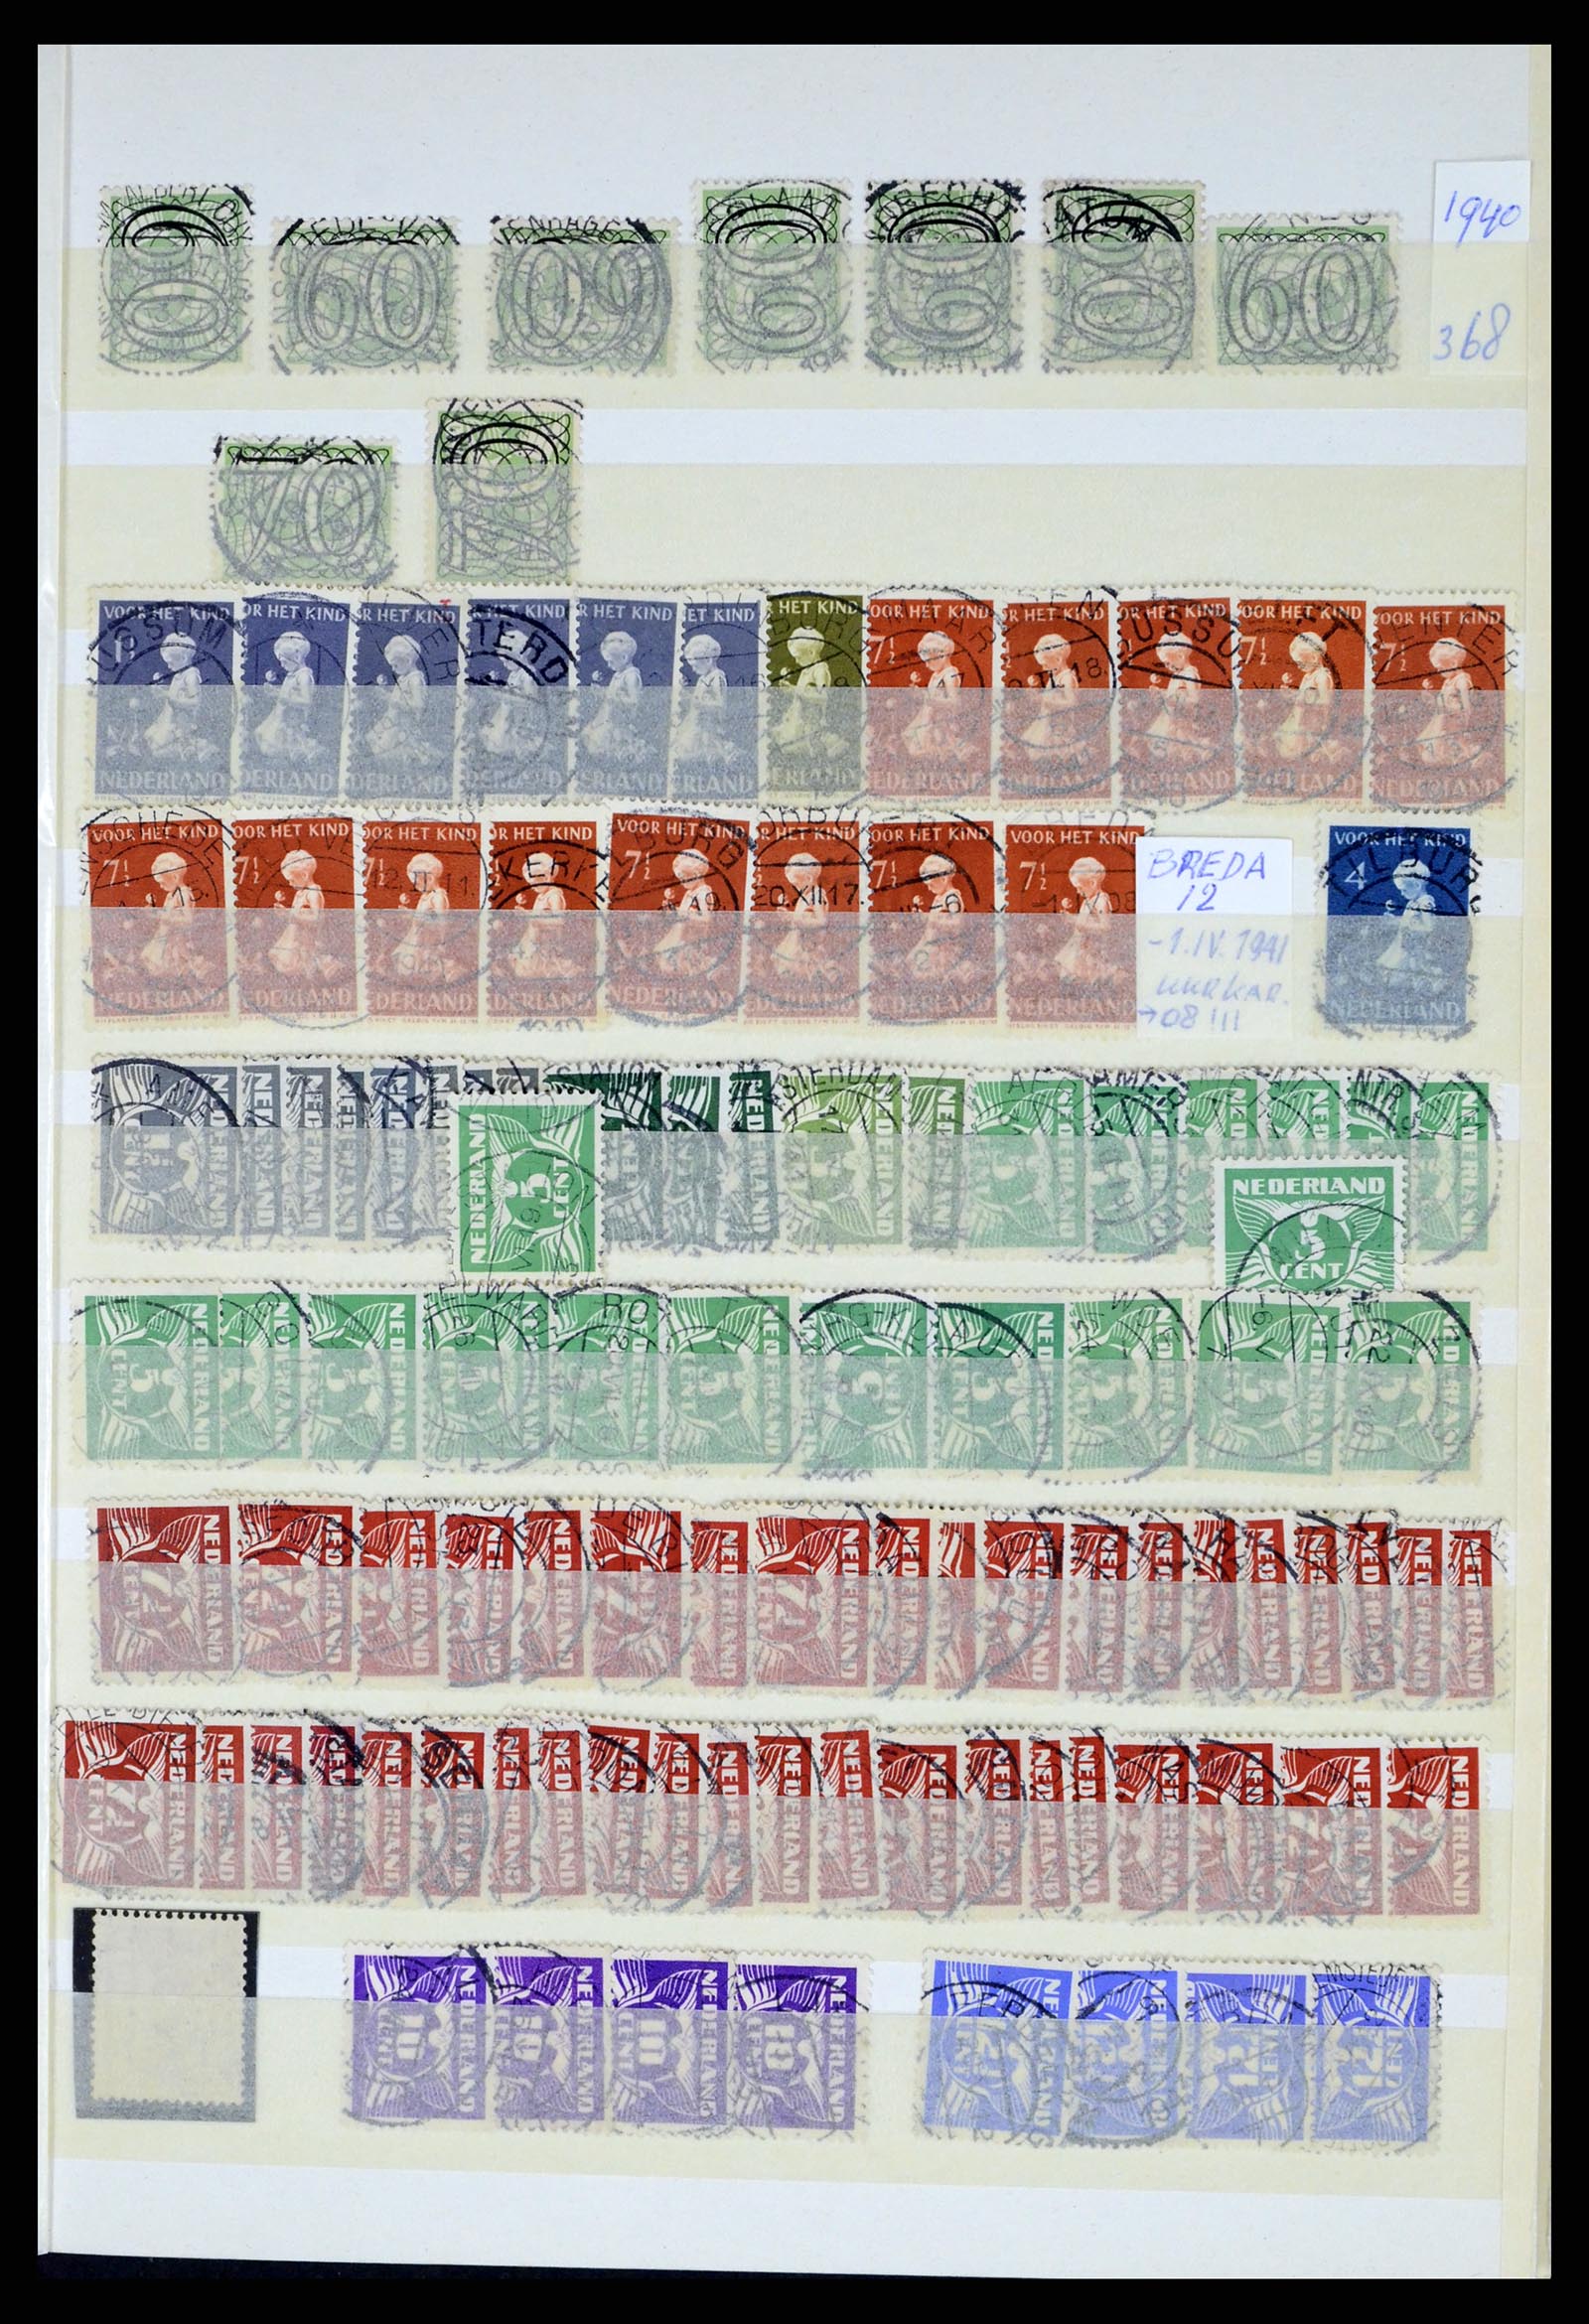 37424 031 - Stamp collection 37424 Netherlands shortbar cancels.